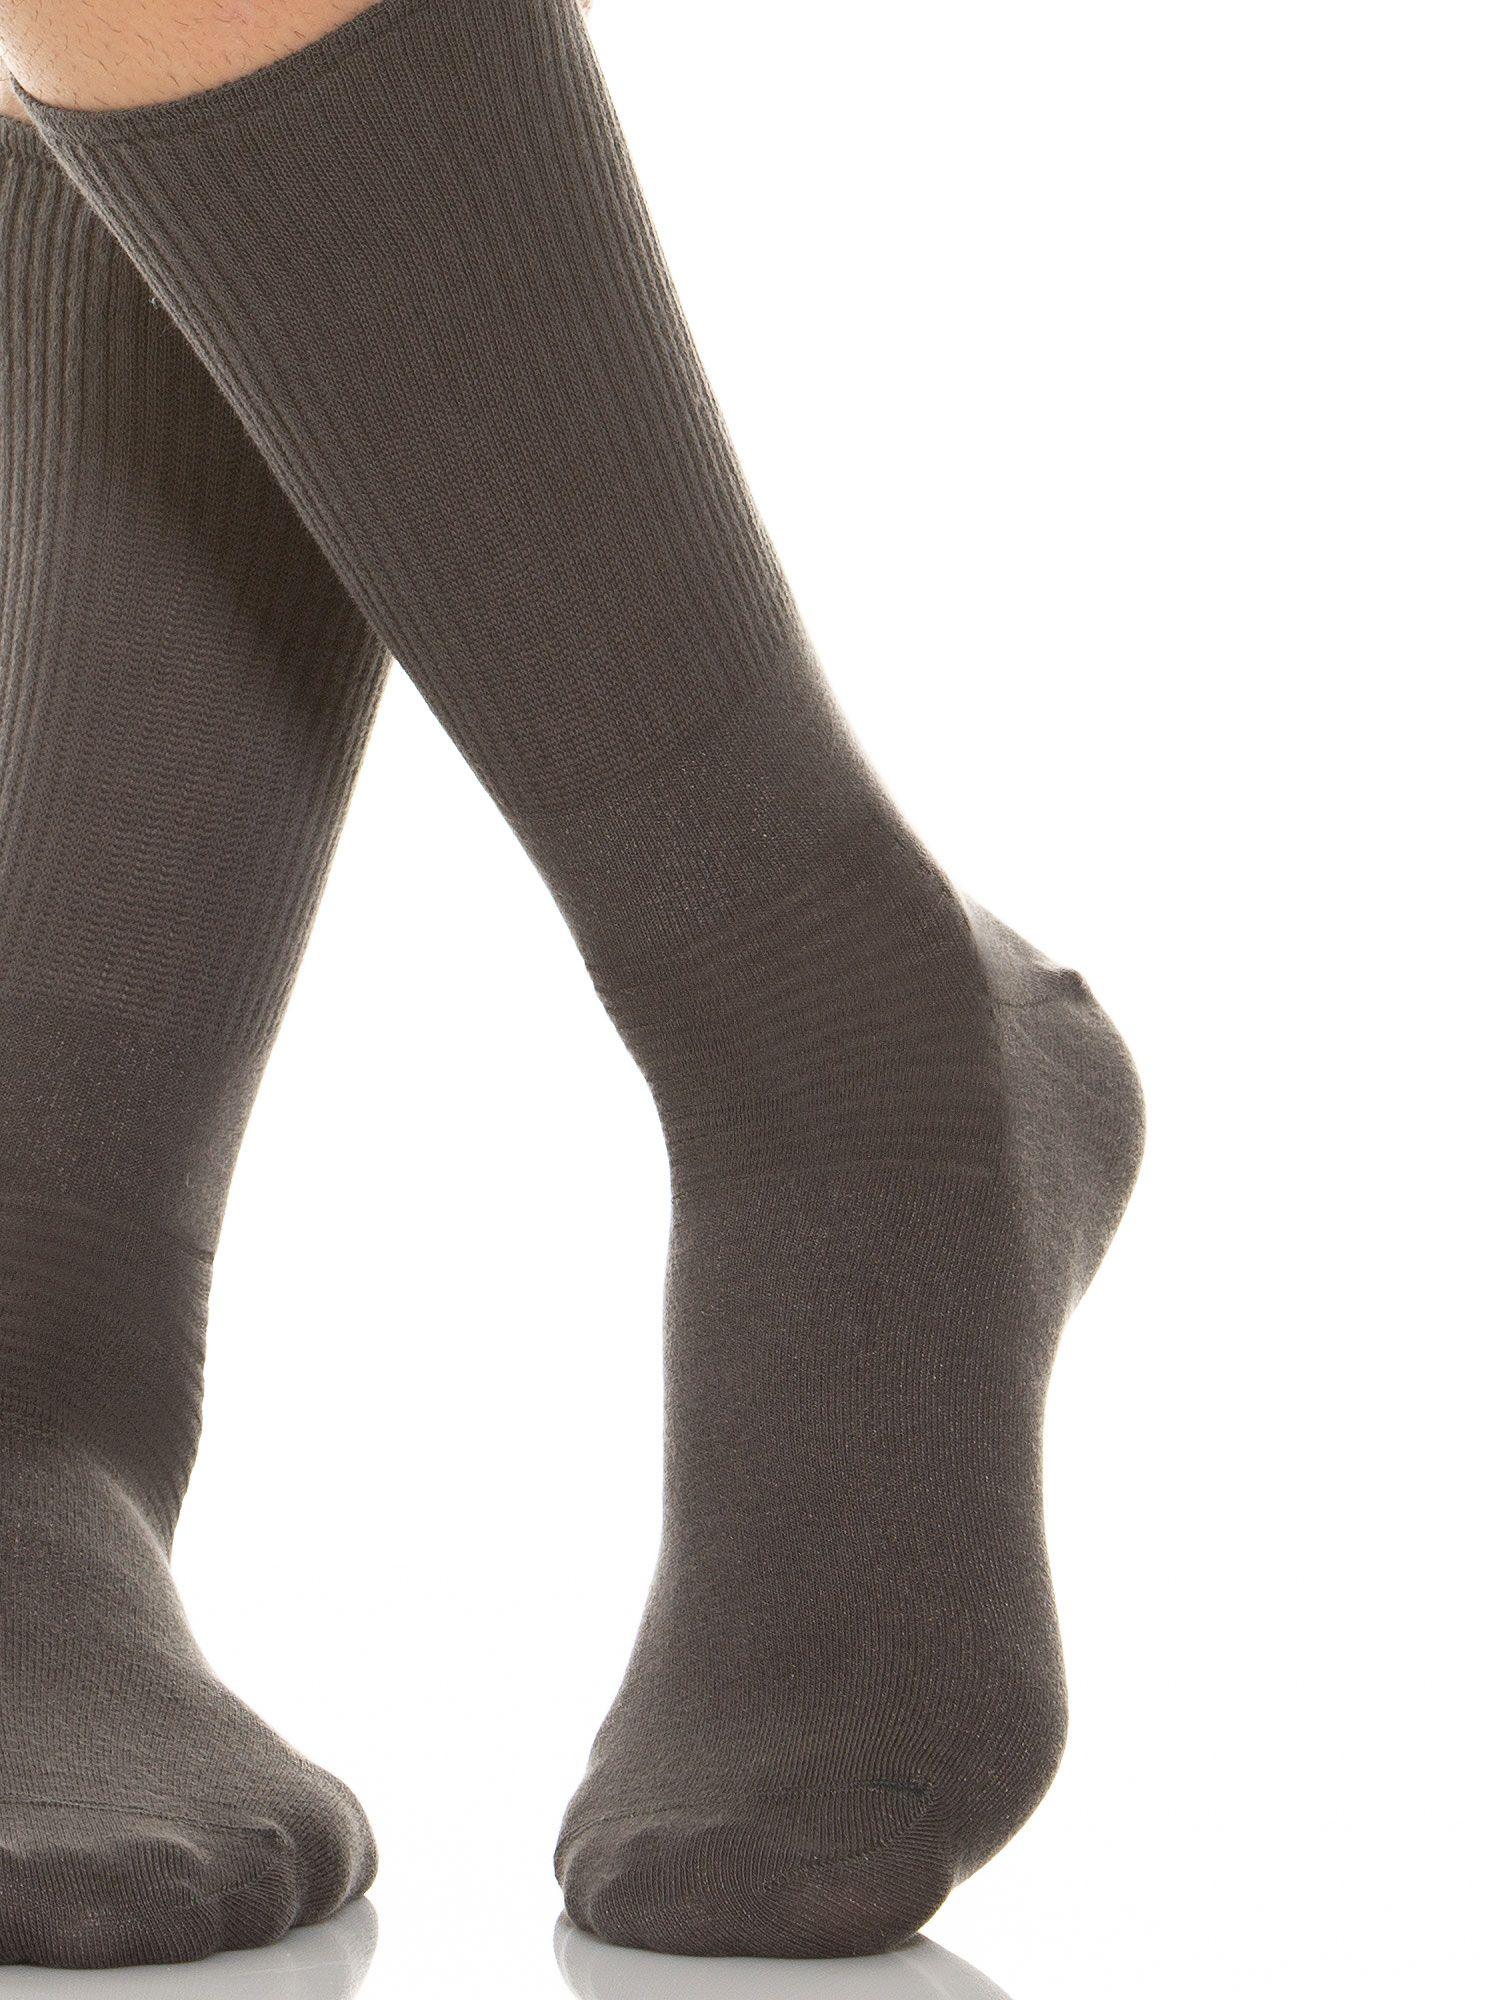 Buy fibre socks Wellness Shoppee – X-Static Silver with Diabetic